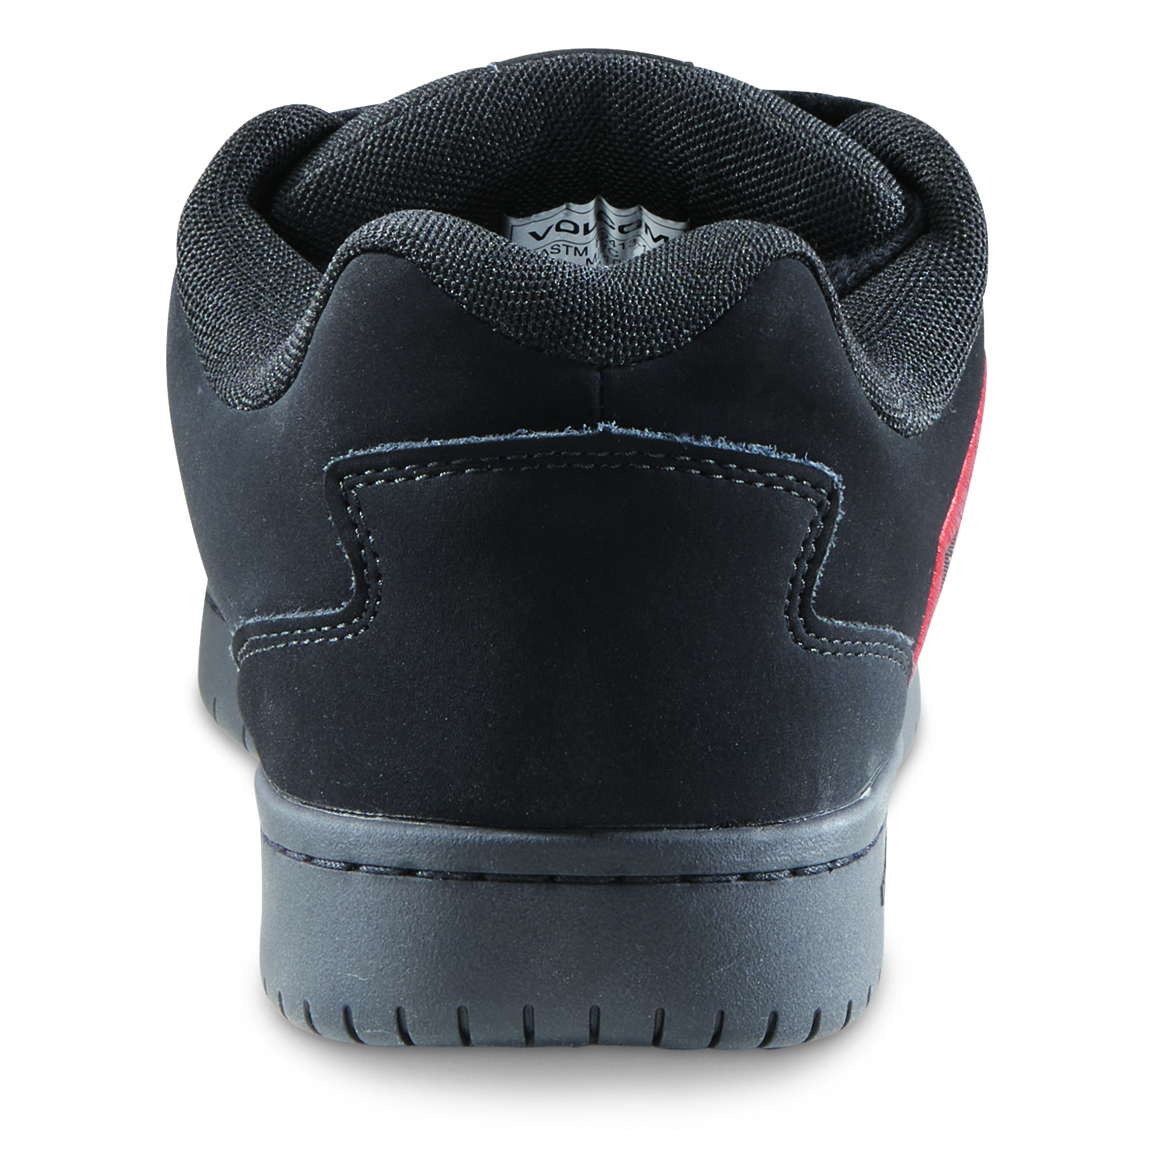 Volcom Men's Stone Composite Toe Work Shoes, Black/Red